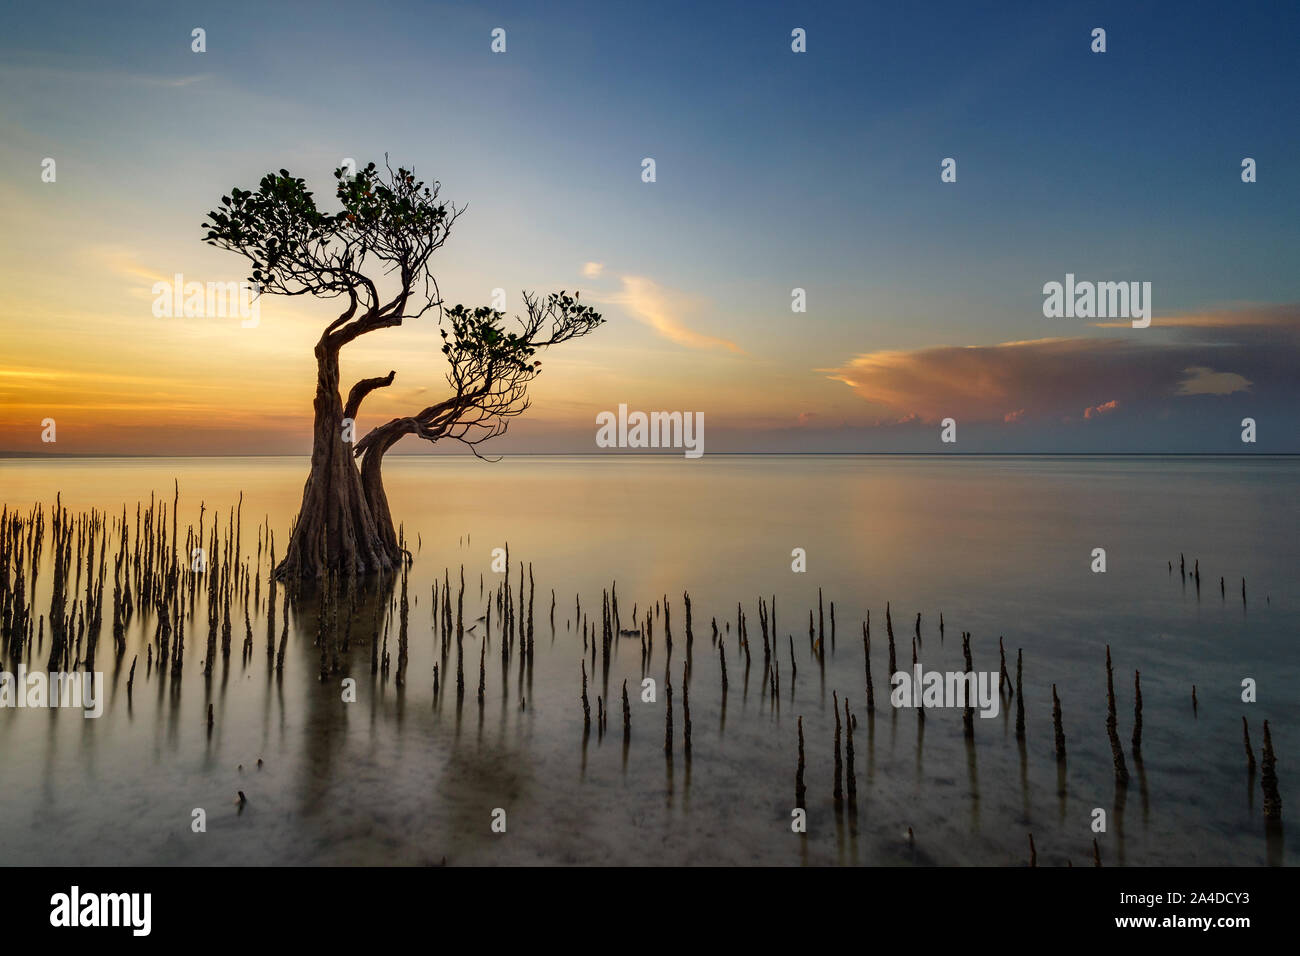 Mangrove at sunset, Walakiri beach, East Suma, East Nusa Tengara, Indonesia Stock Photo